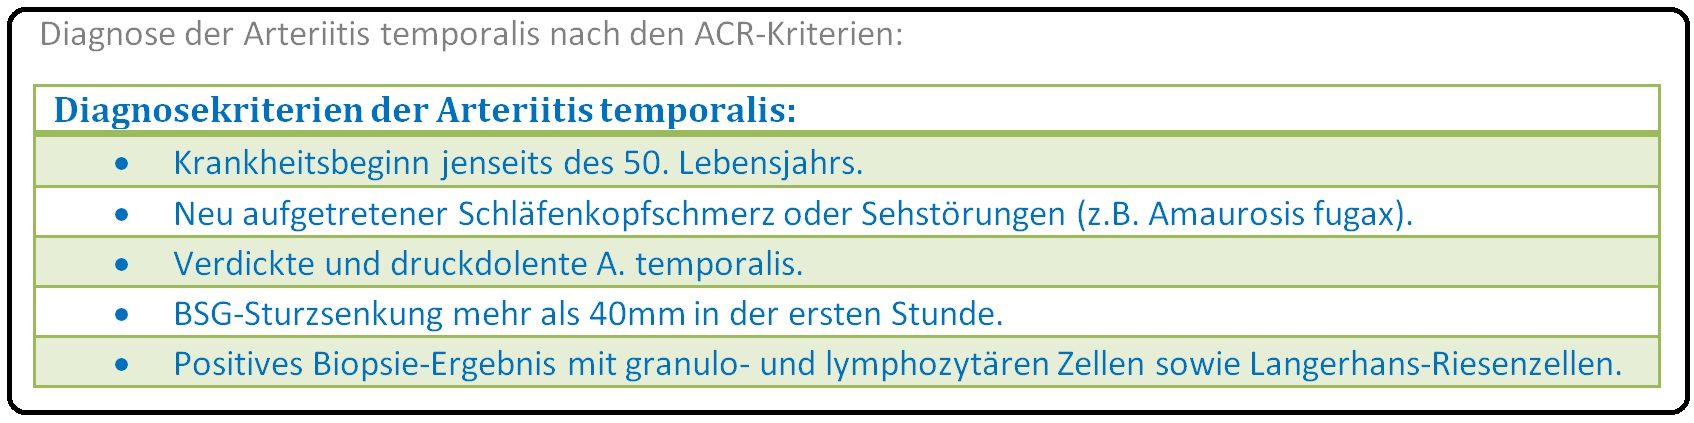 071 Diagnose der Arteriitis temporalis nach den ACR Kriterien